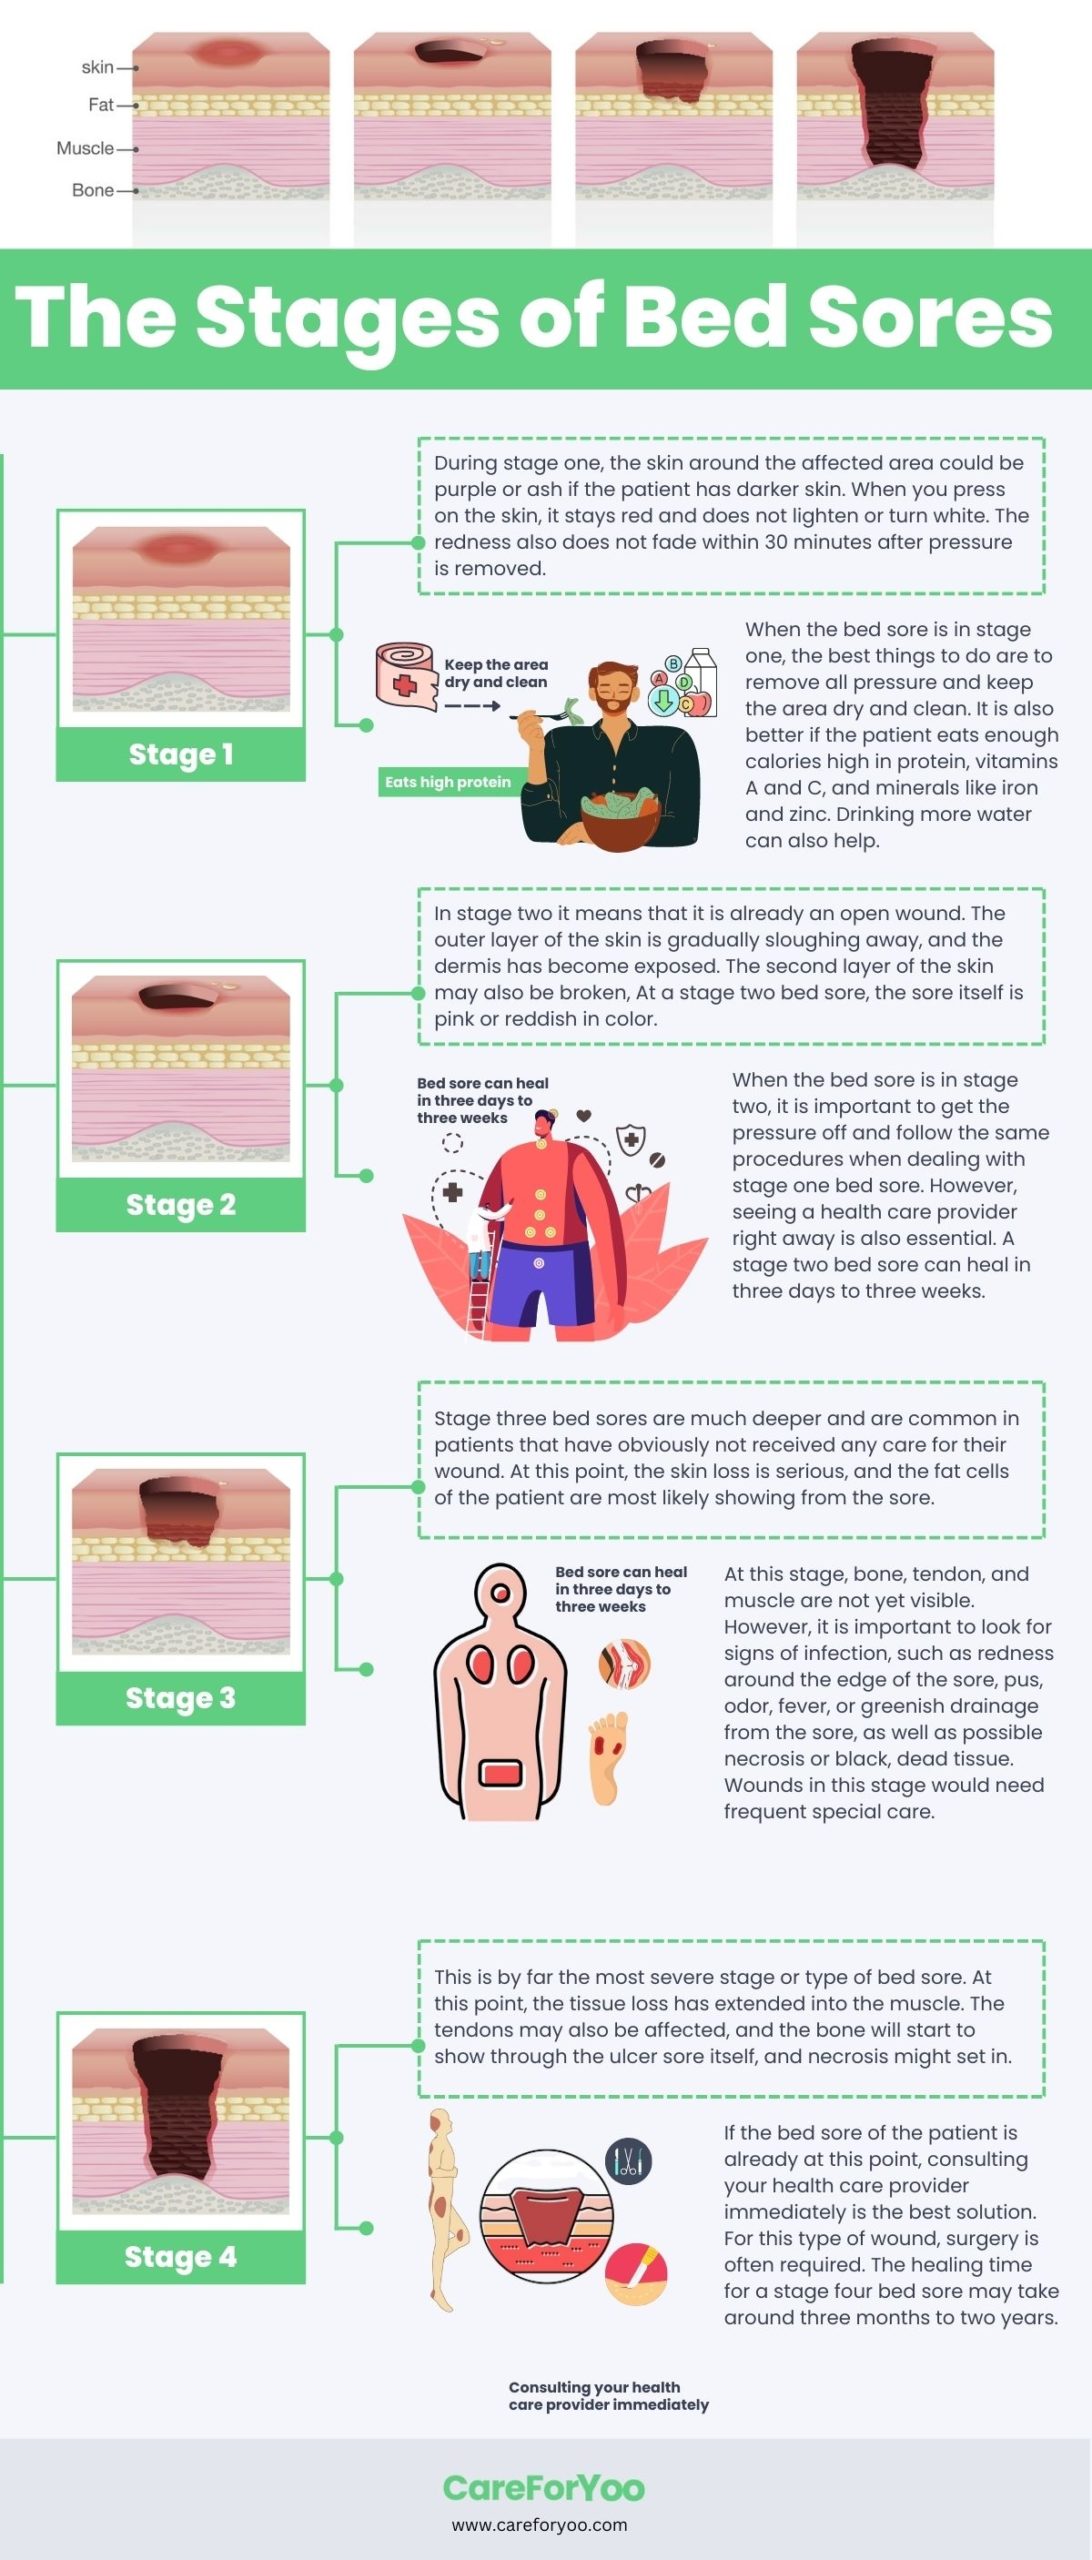 Ways to treat bed sores.